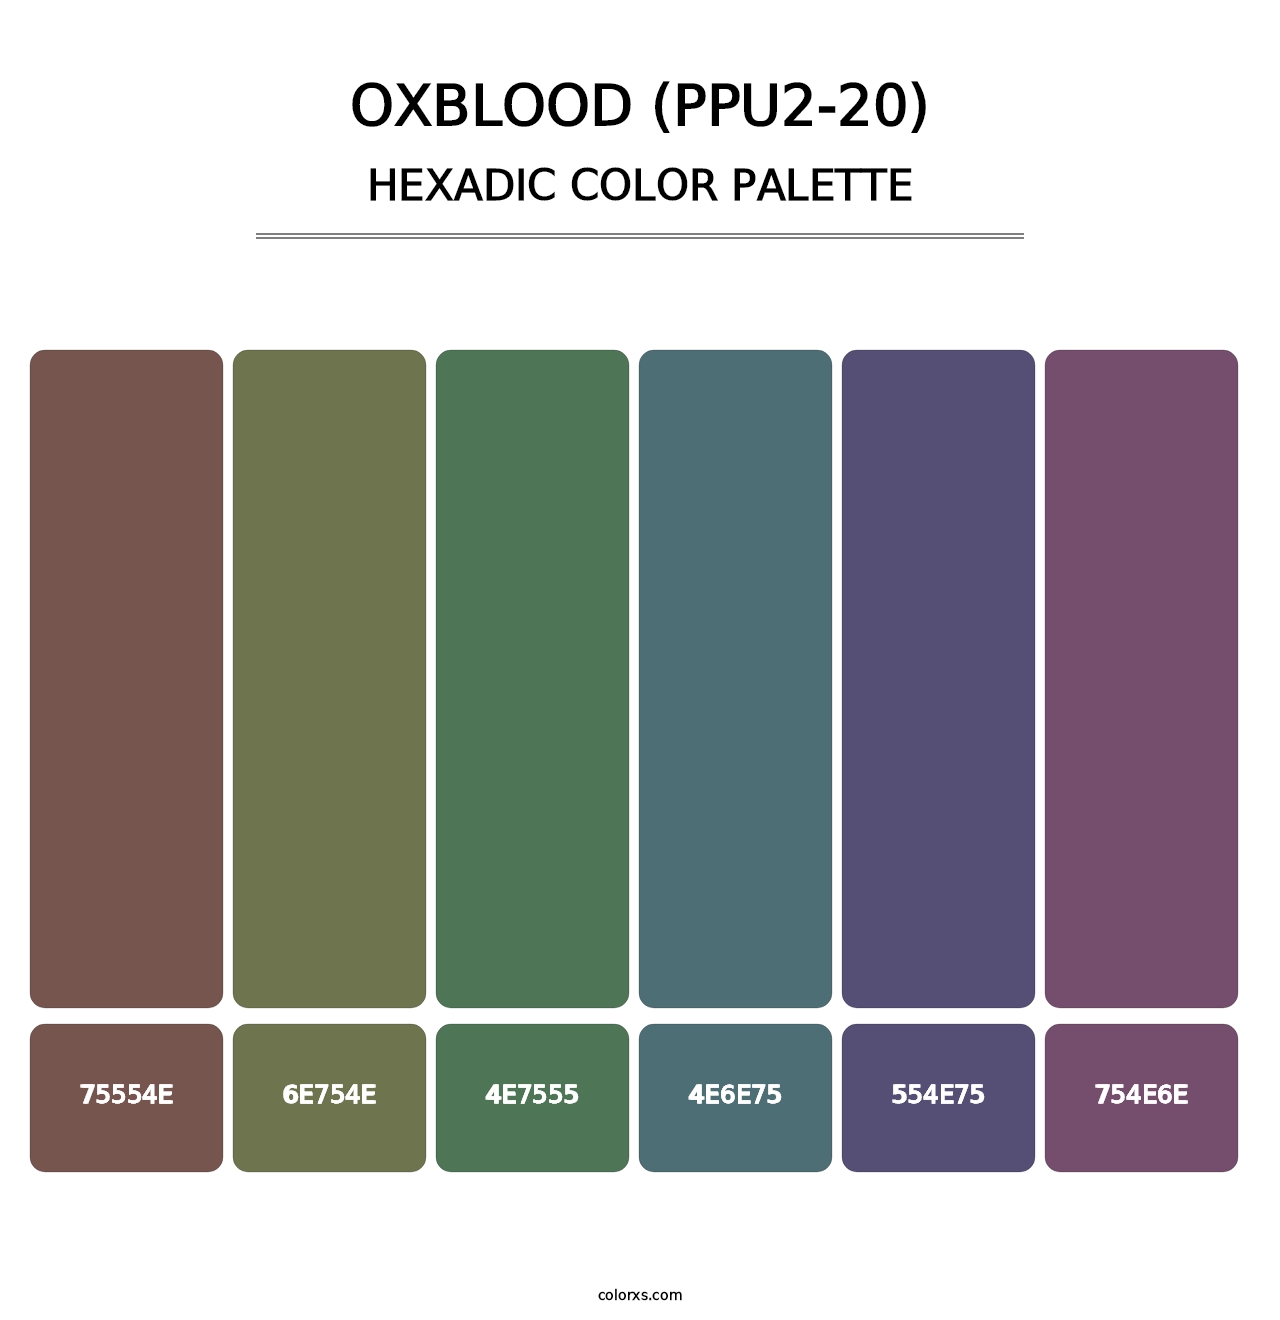 Oxblood (PPU2-20) - Hexadic Color Palette